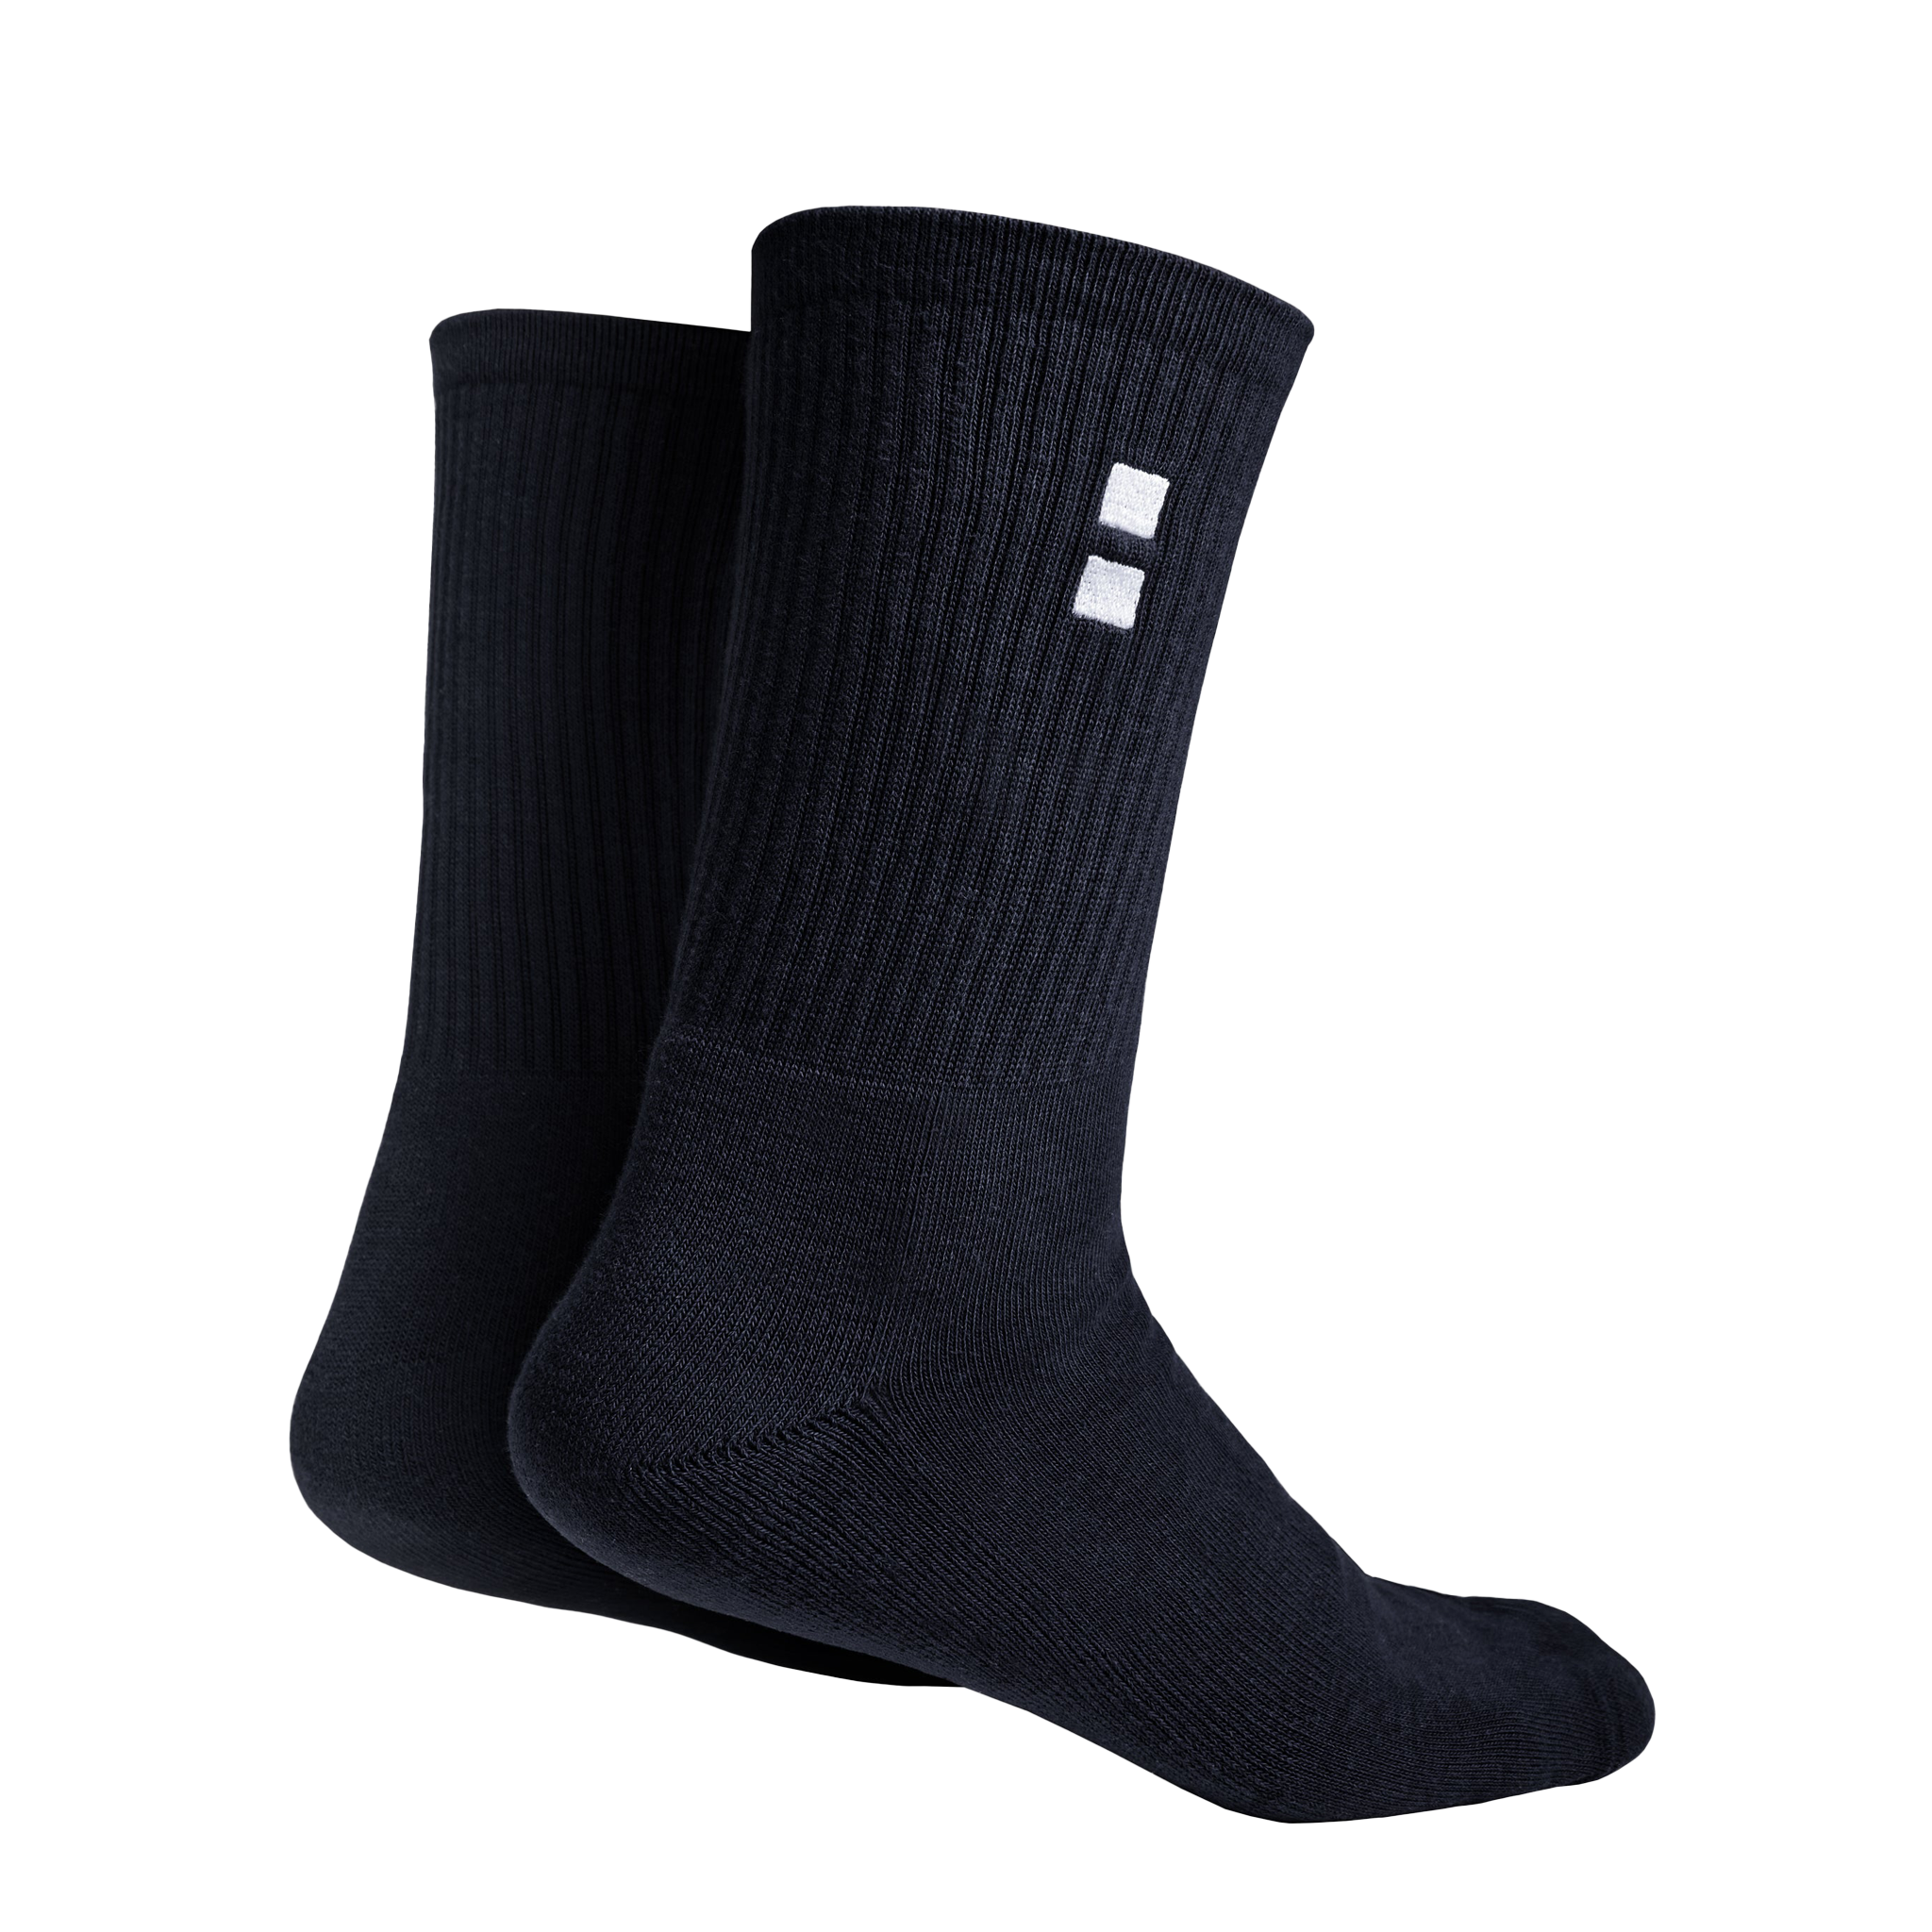 nordicdots Club Socks 2-Pack Black